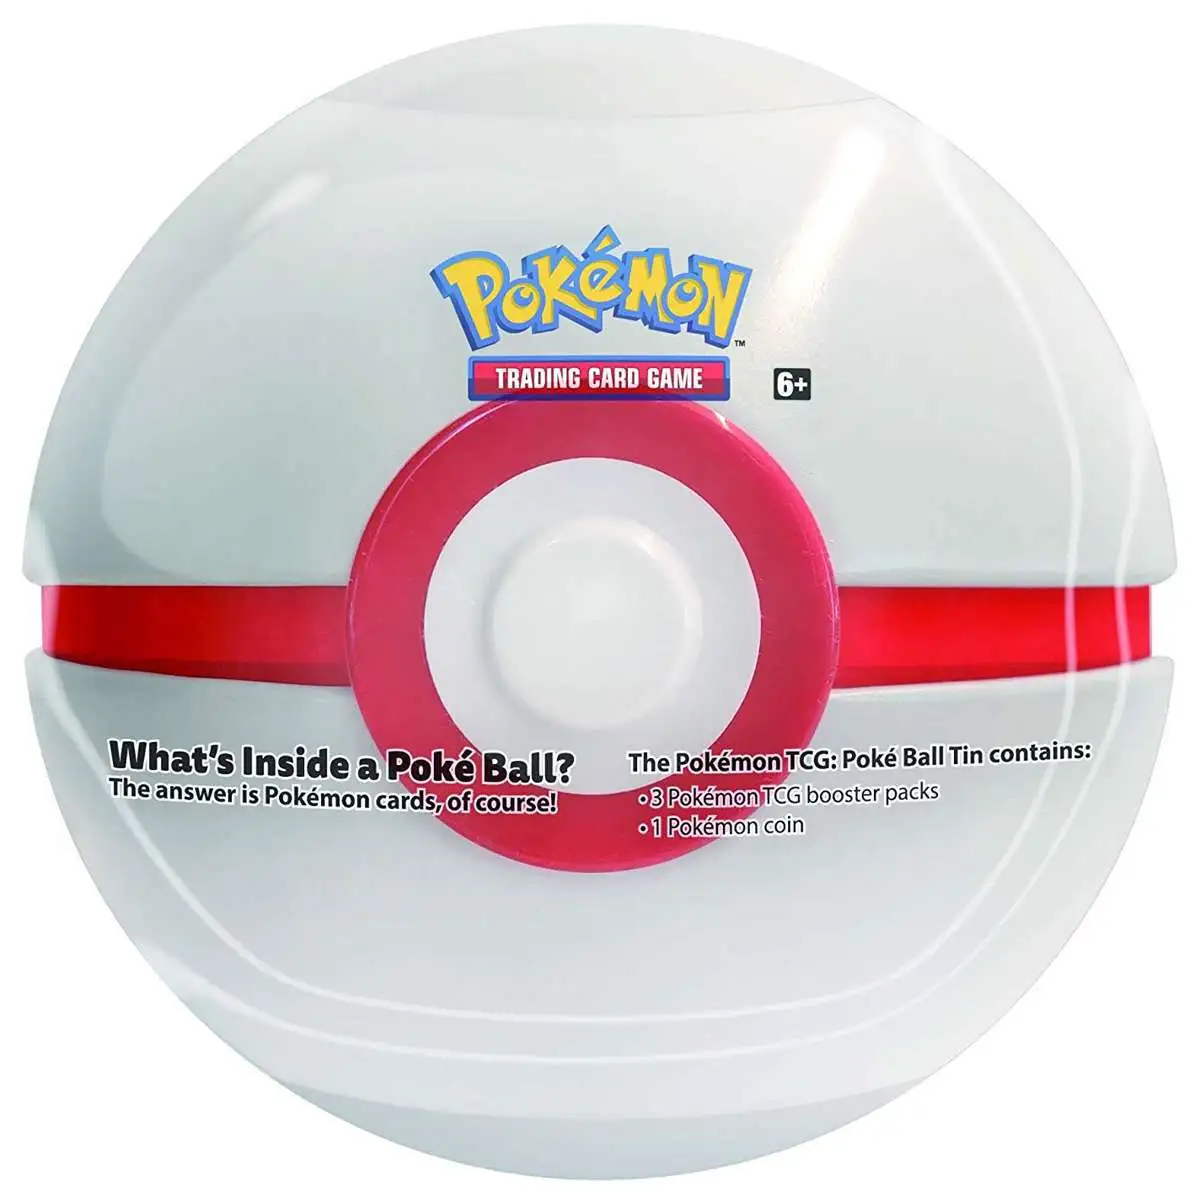 3 Pack PokeBall Tins Pokemon Inc XY Evolutions TCG Booster Packs & Pokémon Coins 